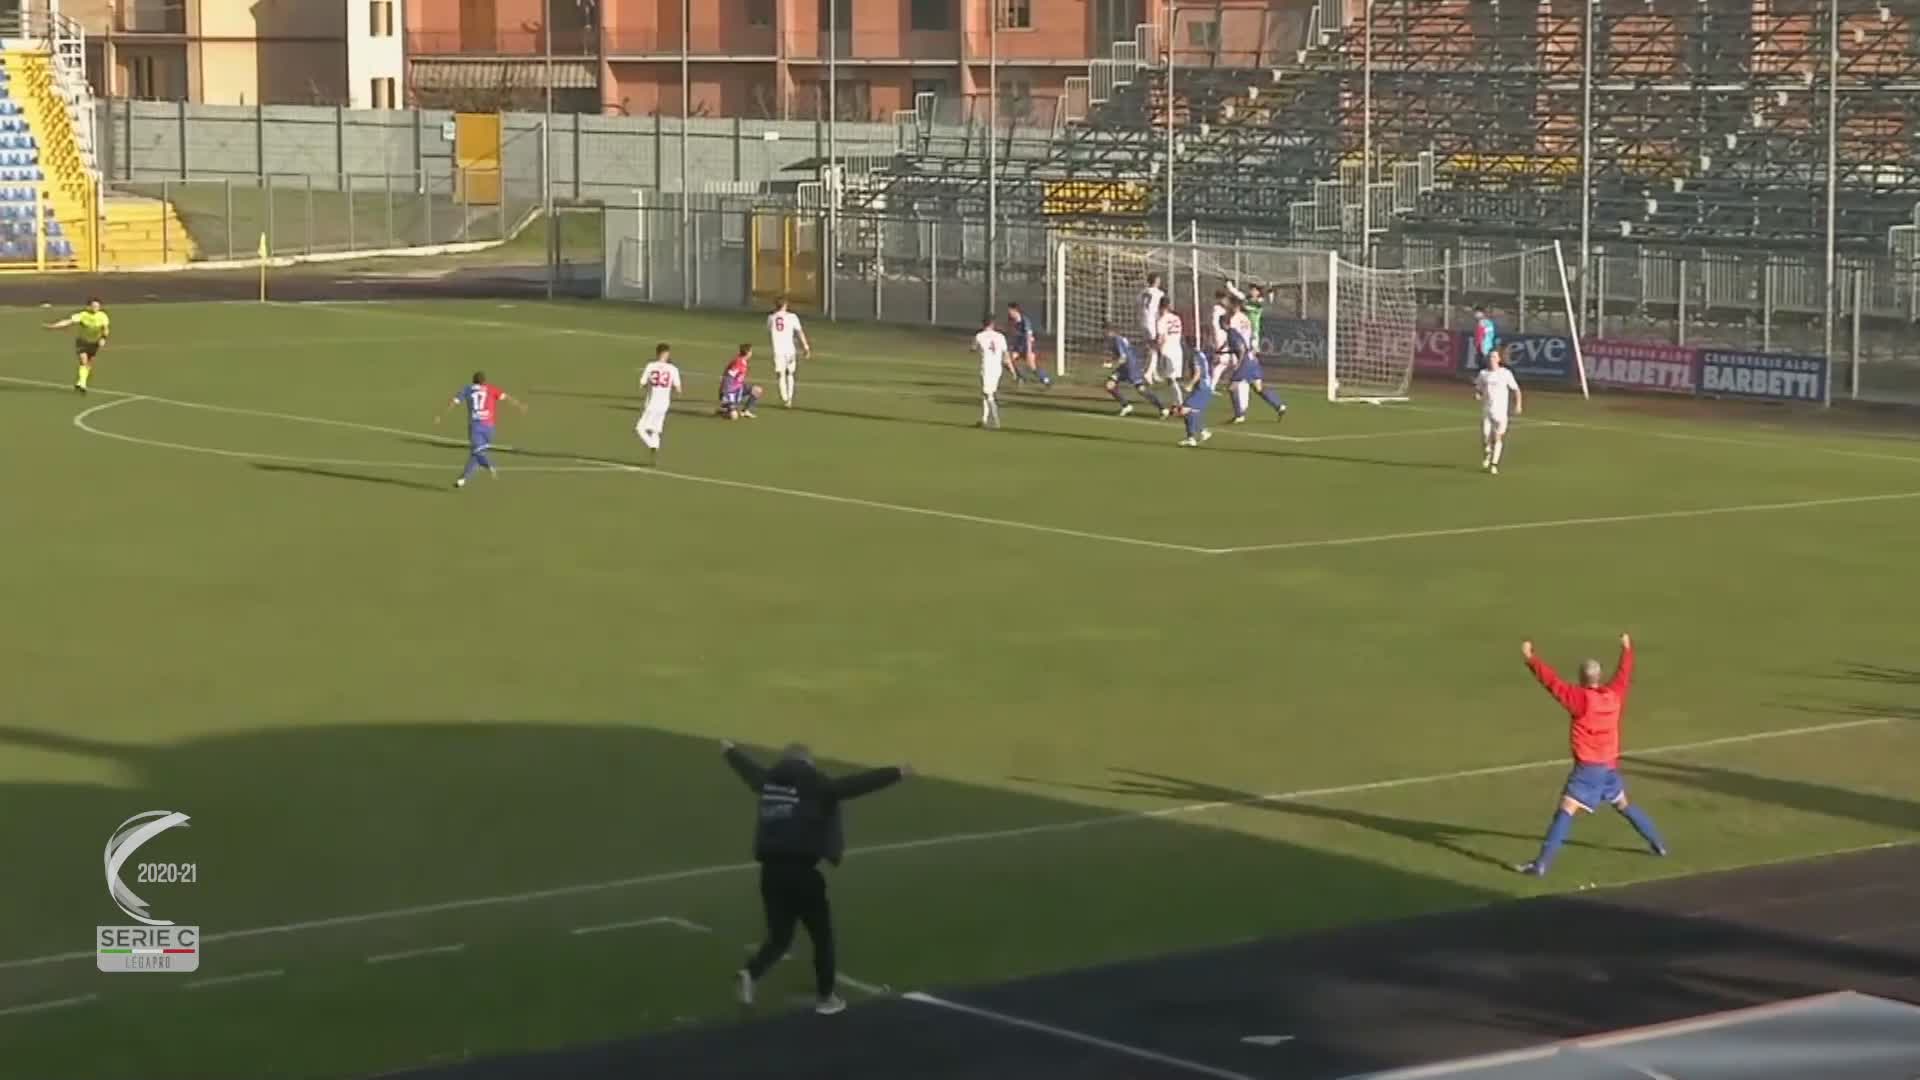 Gubbio-Vis Pesaro 1-1, occasione fallita per i rossoblù